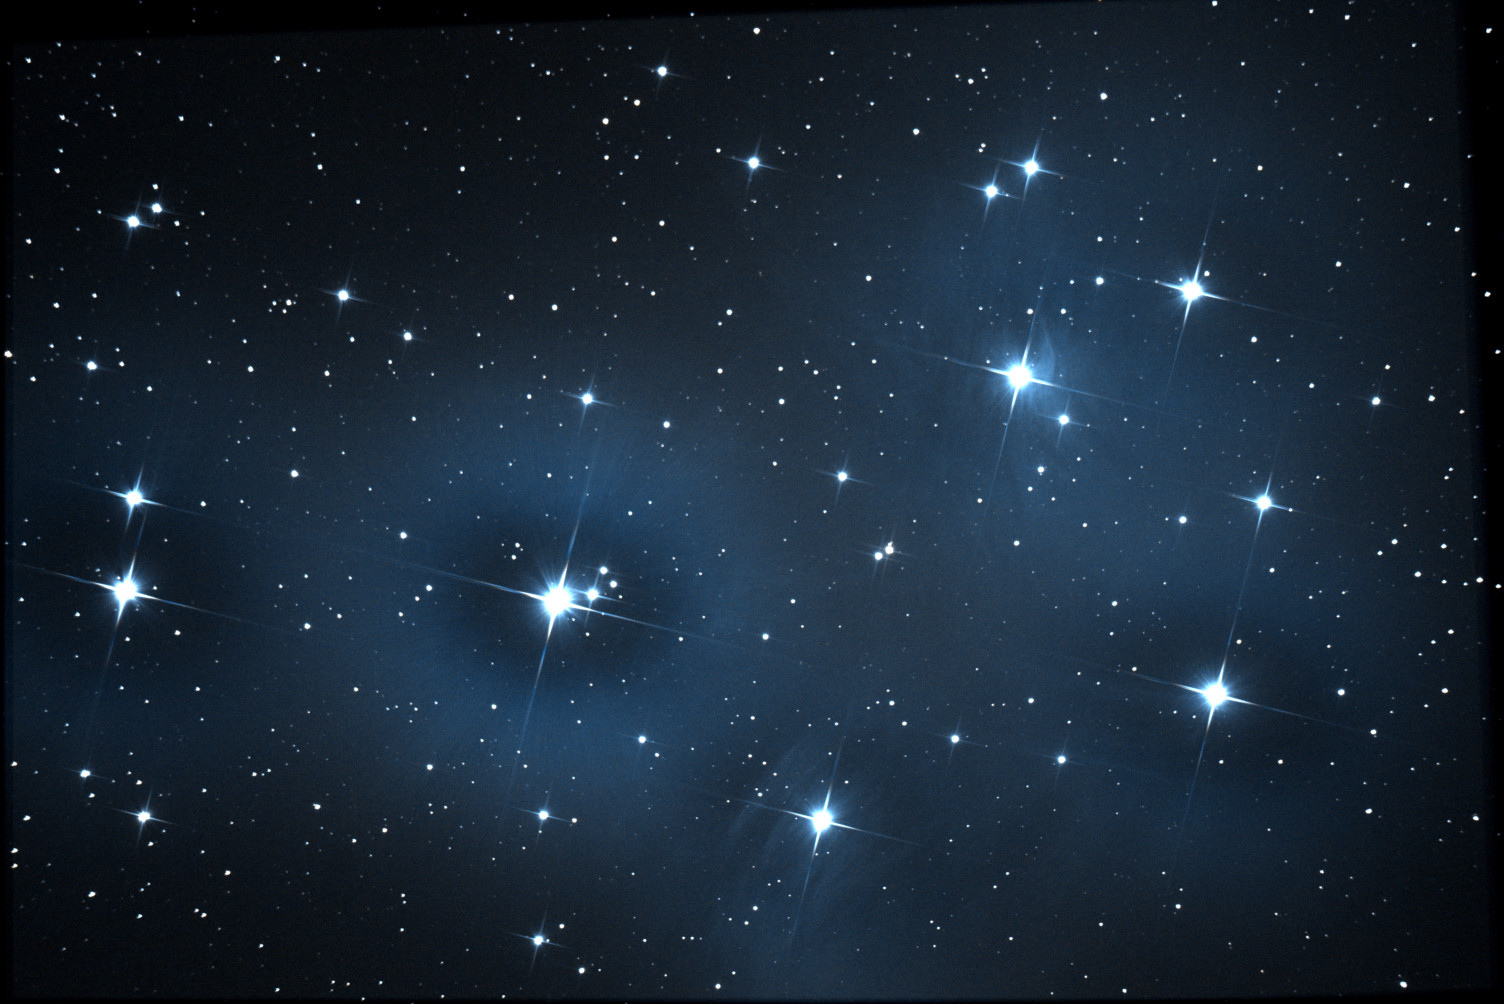 Pleiades-1.jpg.1948fb7c99441d054b30959a83dece72.jpg